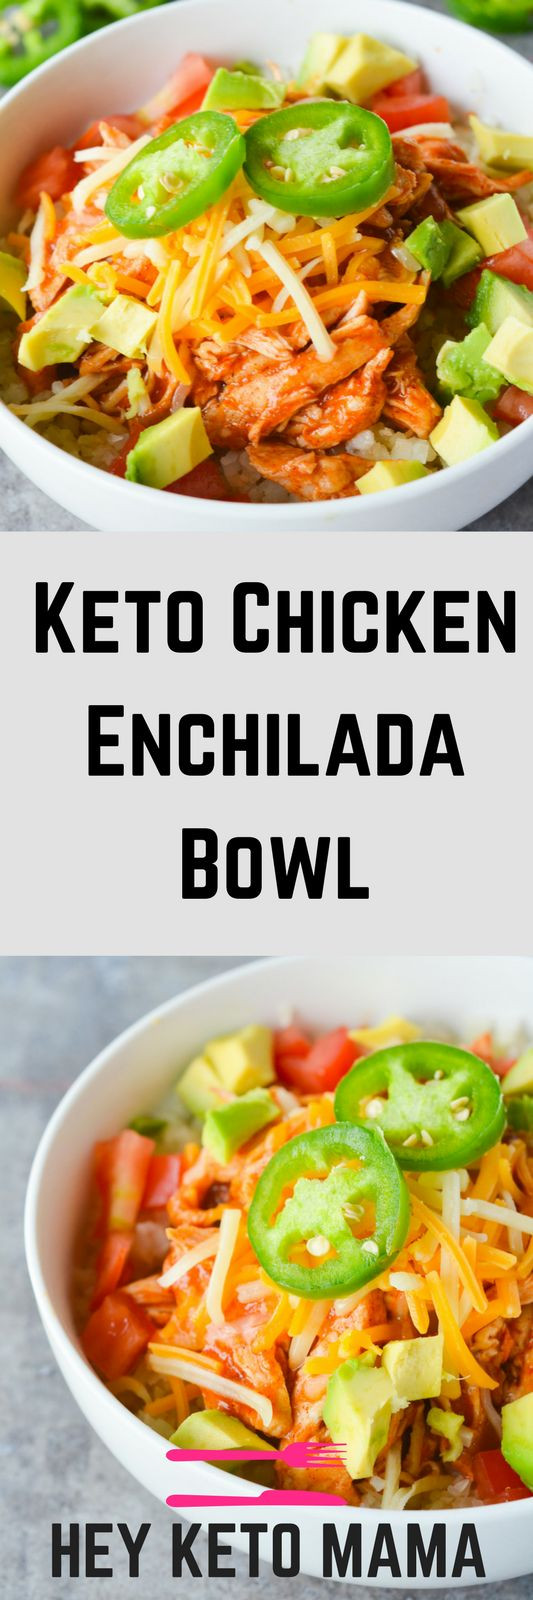 Keto Diet Recipes Dinners Chicken
 Keto Chicken Enchilada Bowl Recipe